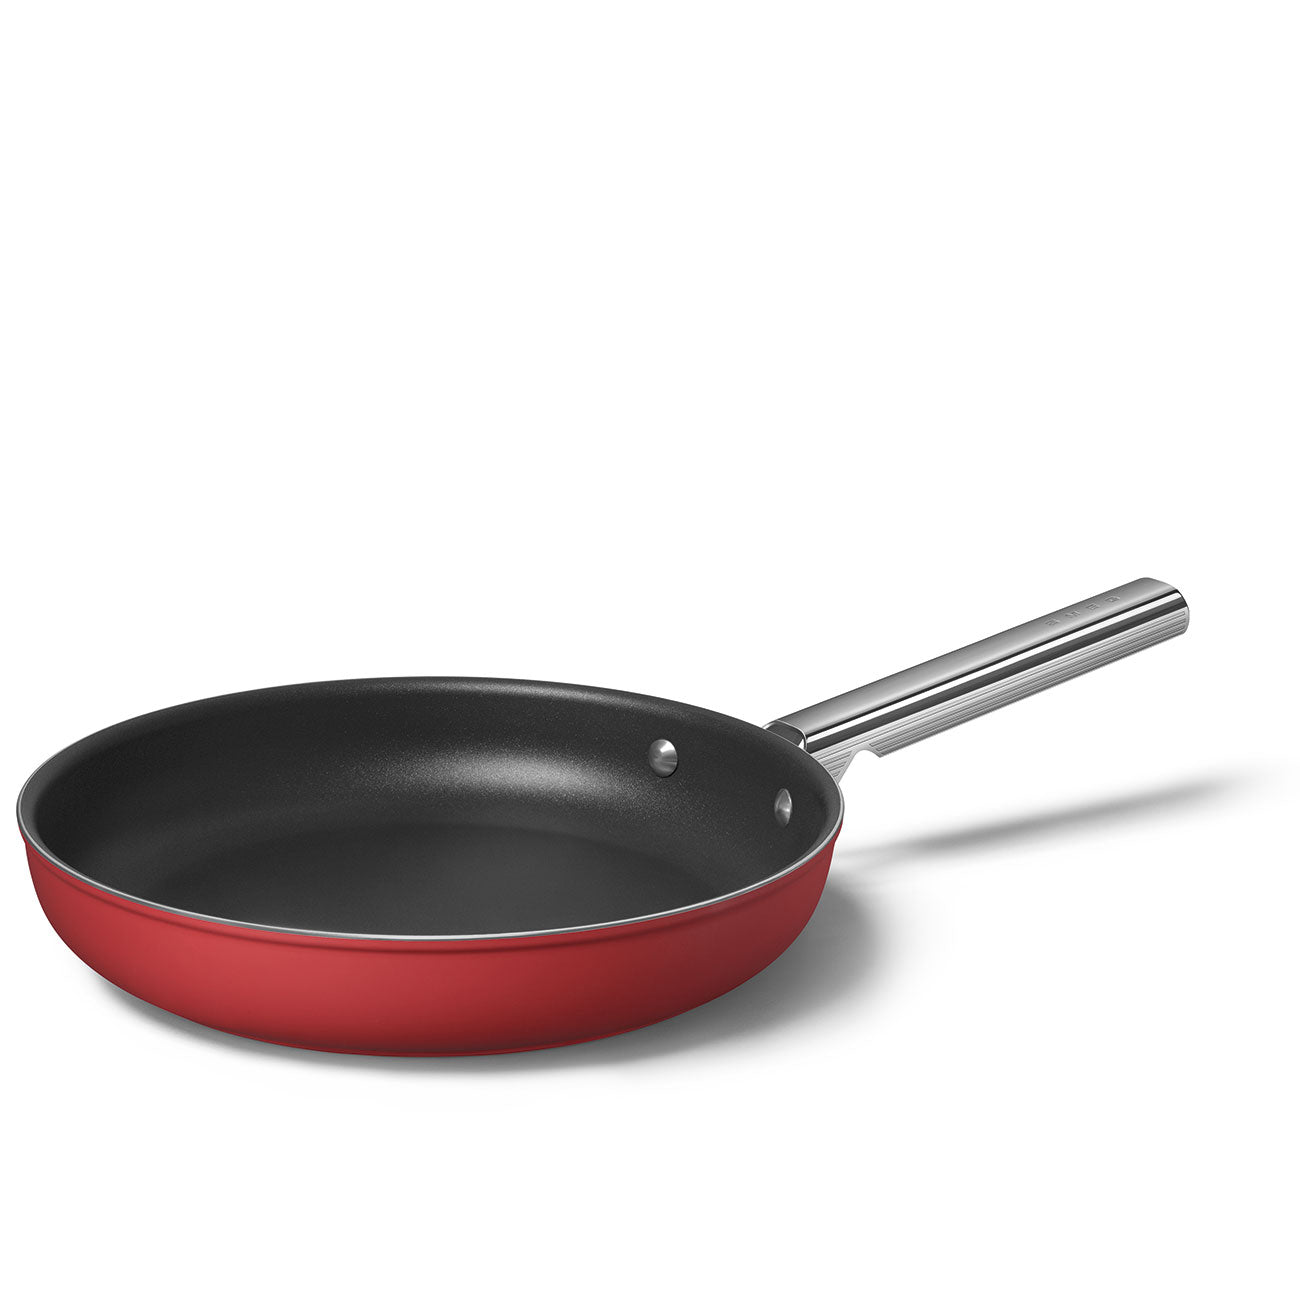 Smeg Non-Stick Frying Pan Red